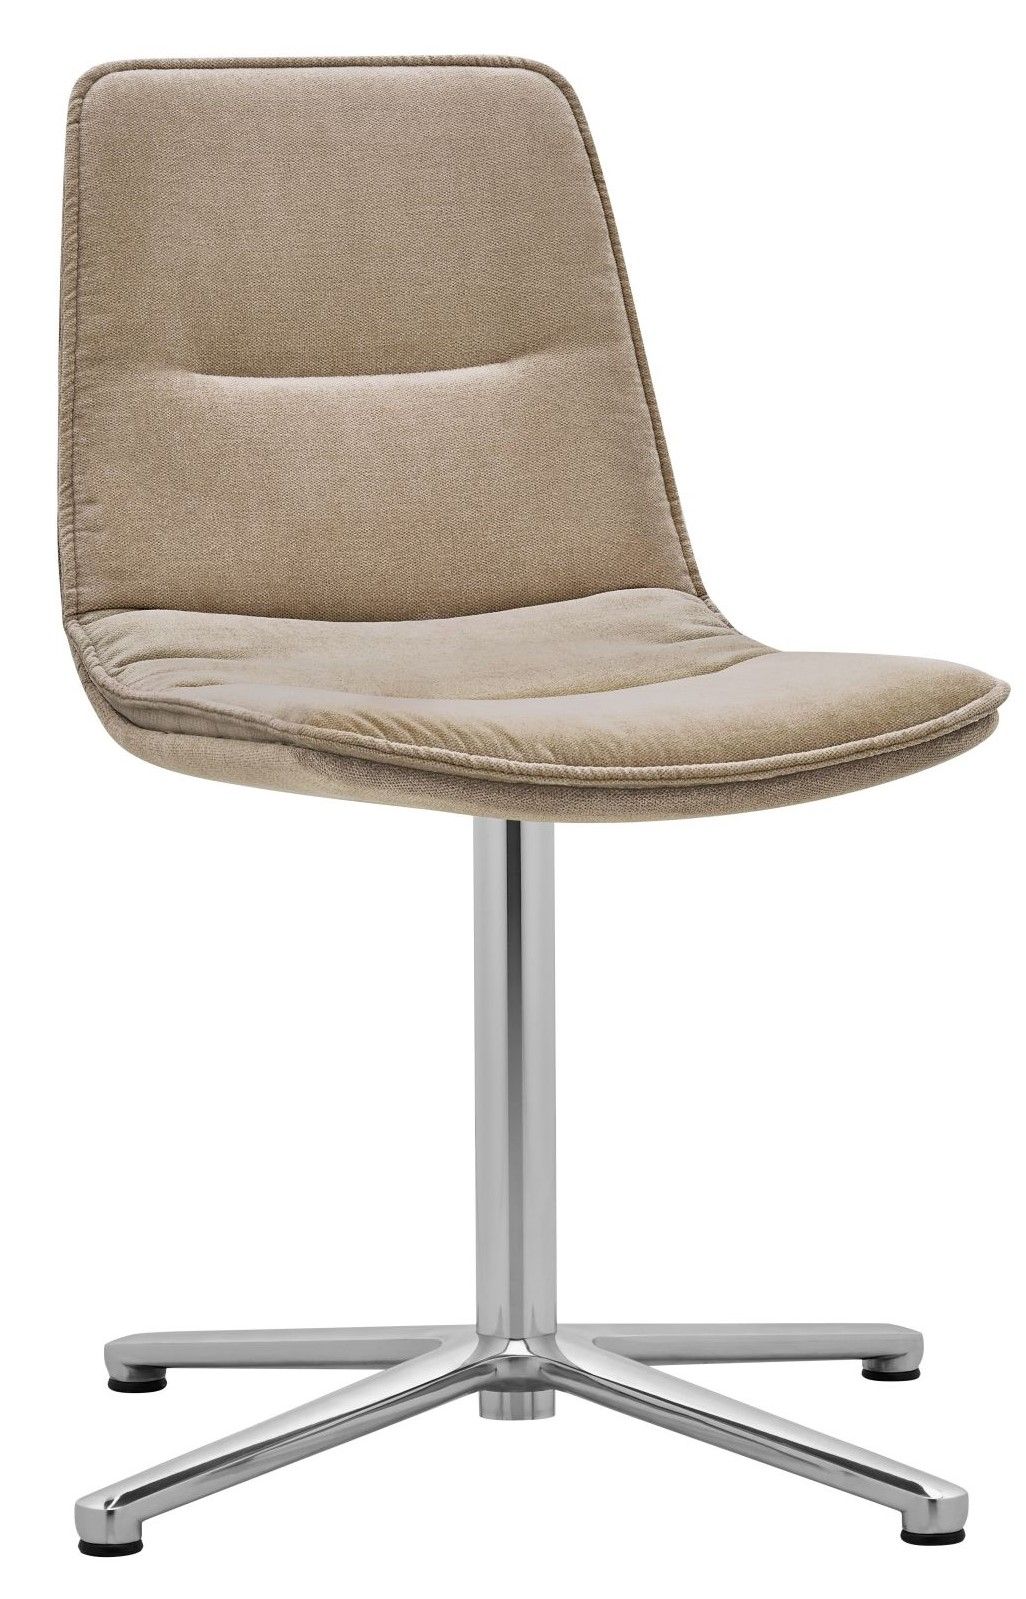 RIM - Otočná stolička EDGE 4201.01